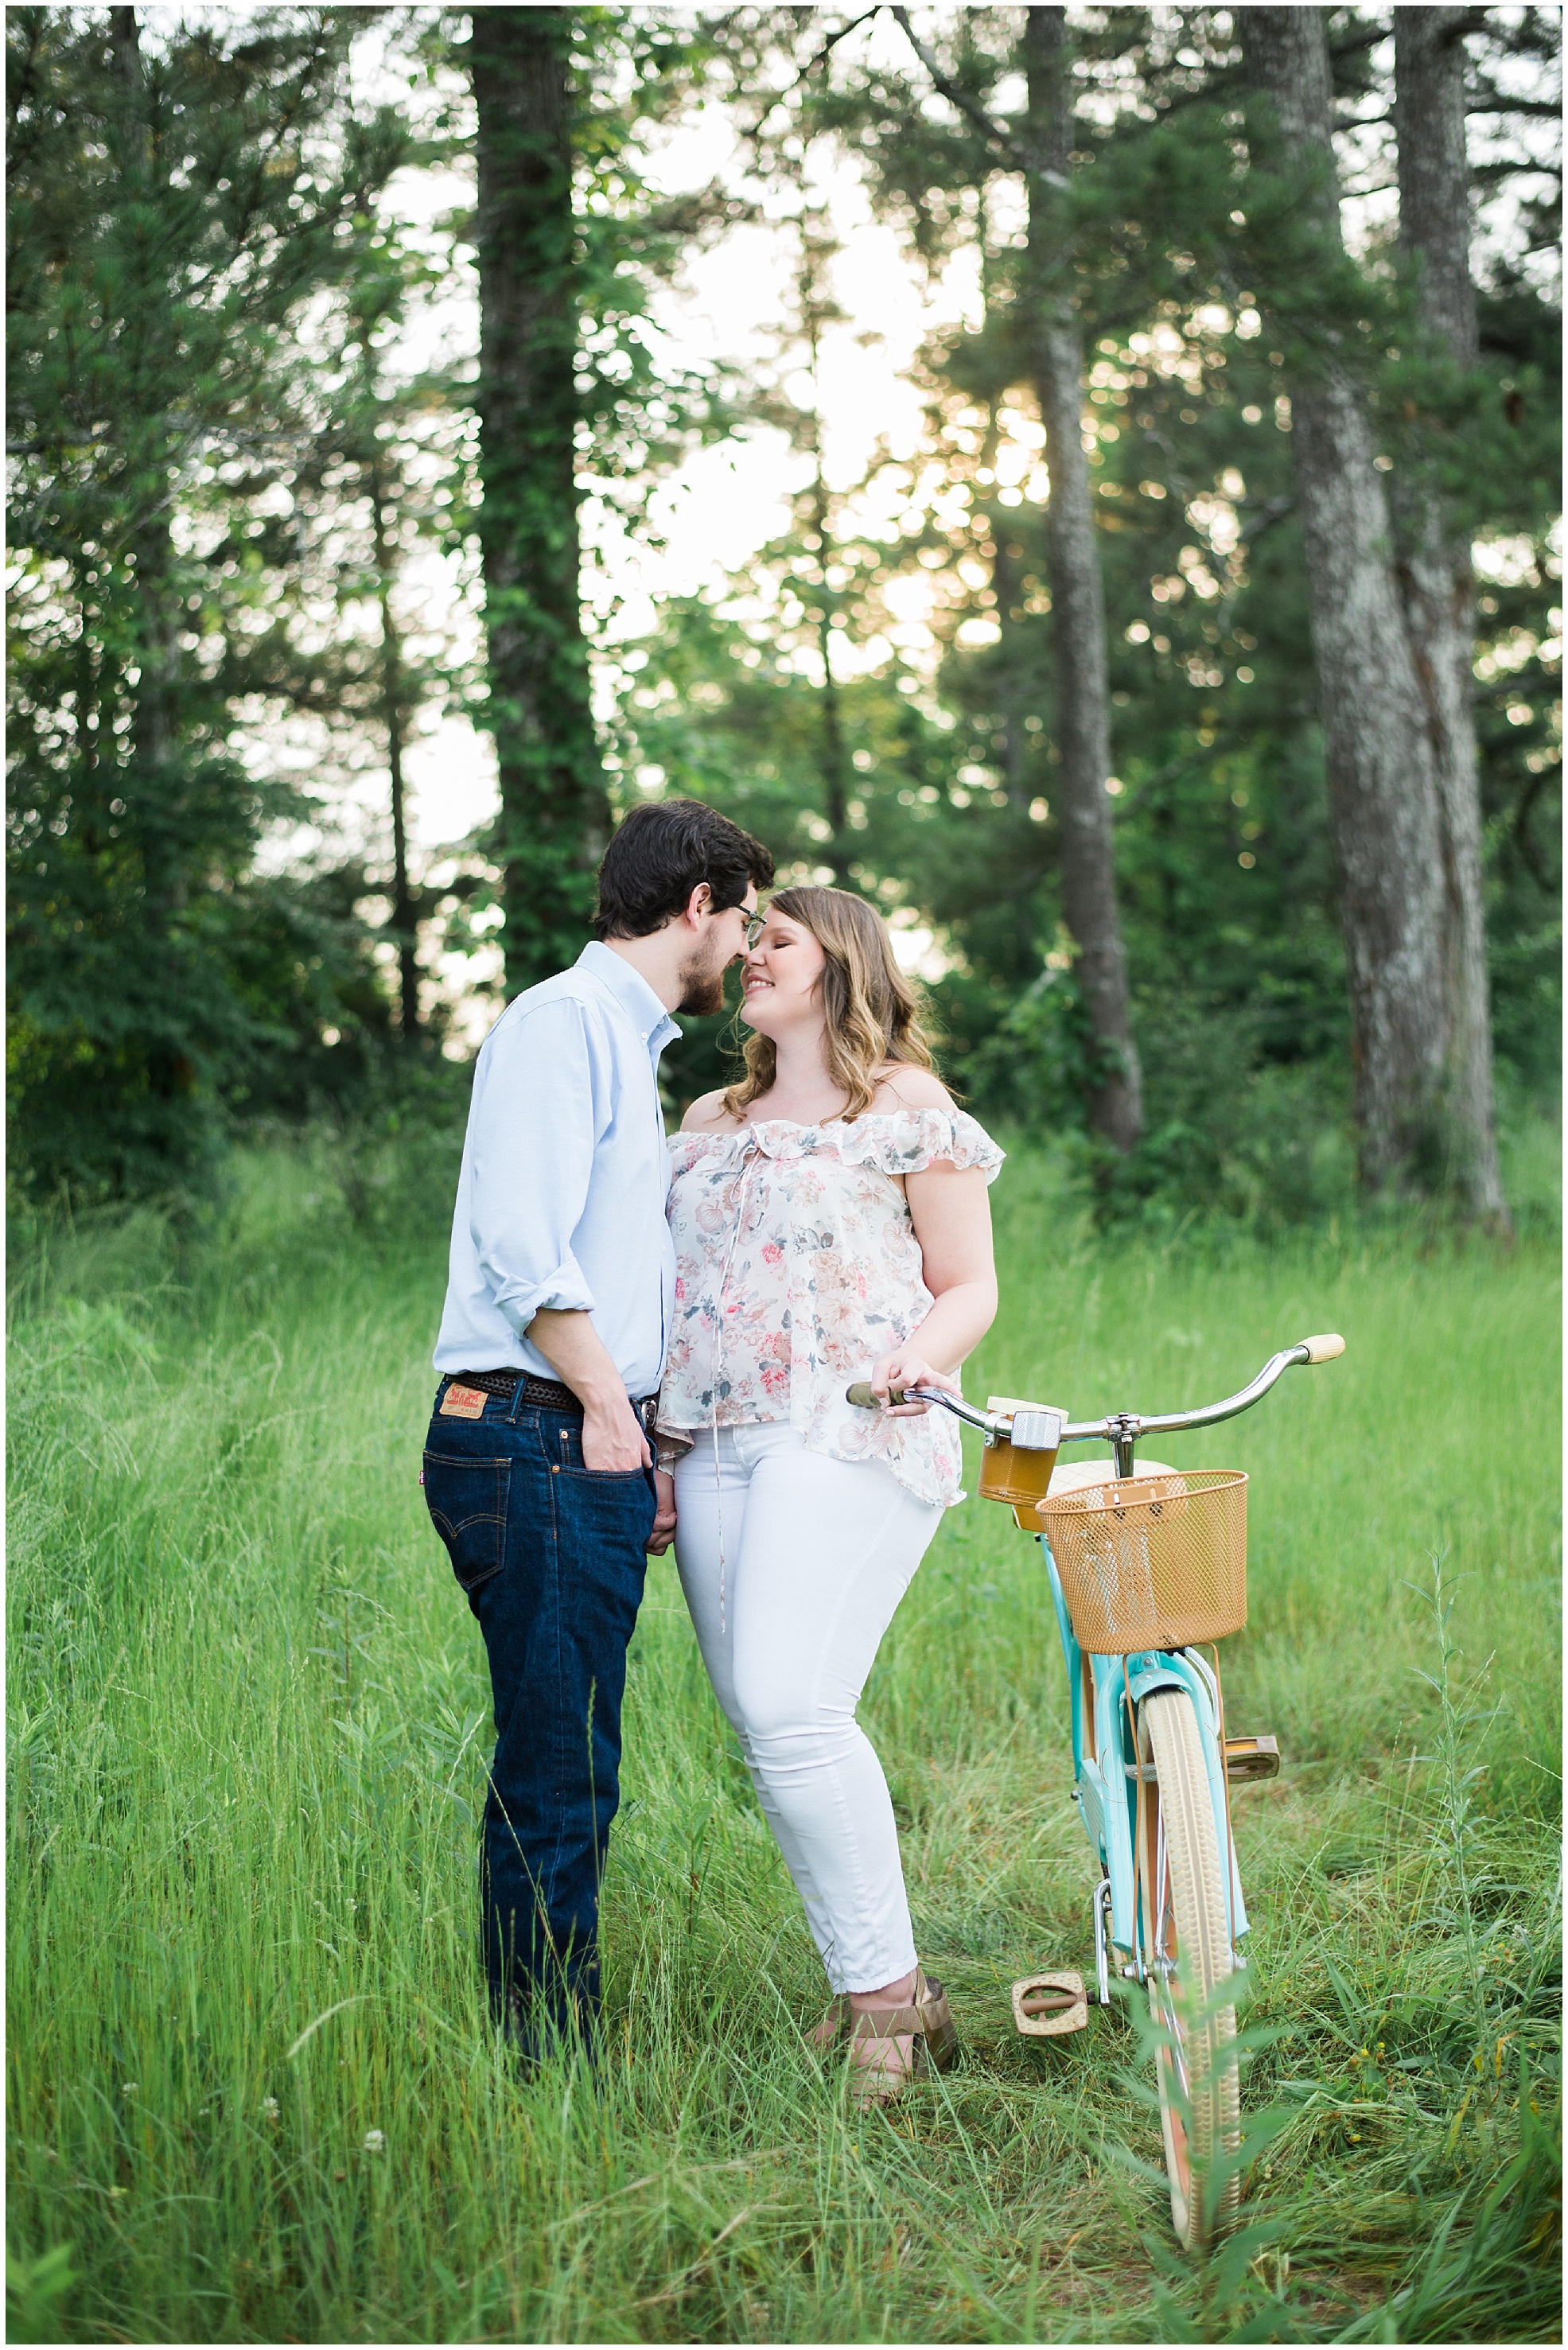 Bromleigh & Jzyk | Alabama Wedding Photographer | Engagement Session | Vincent, AL 